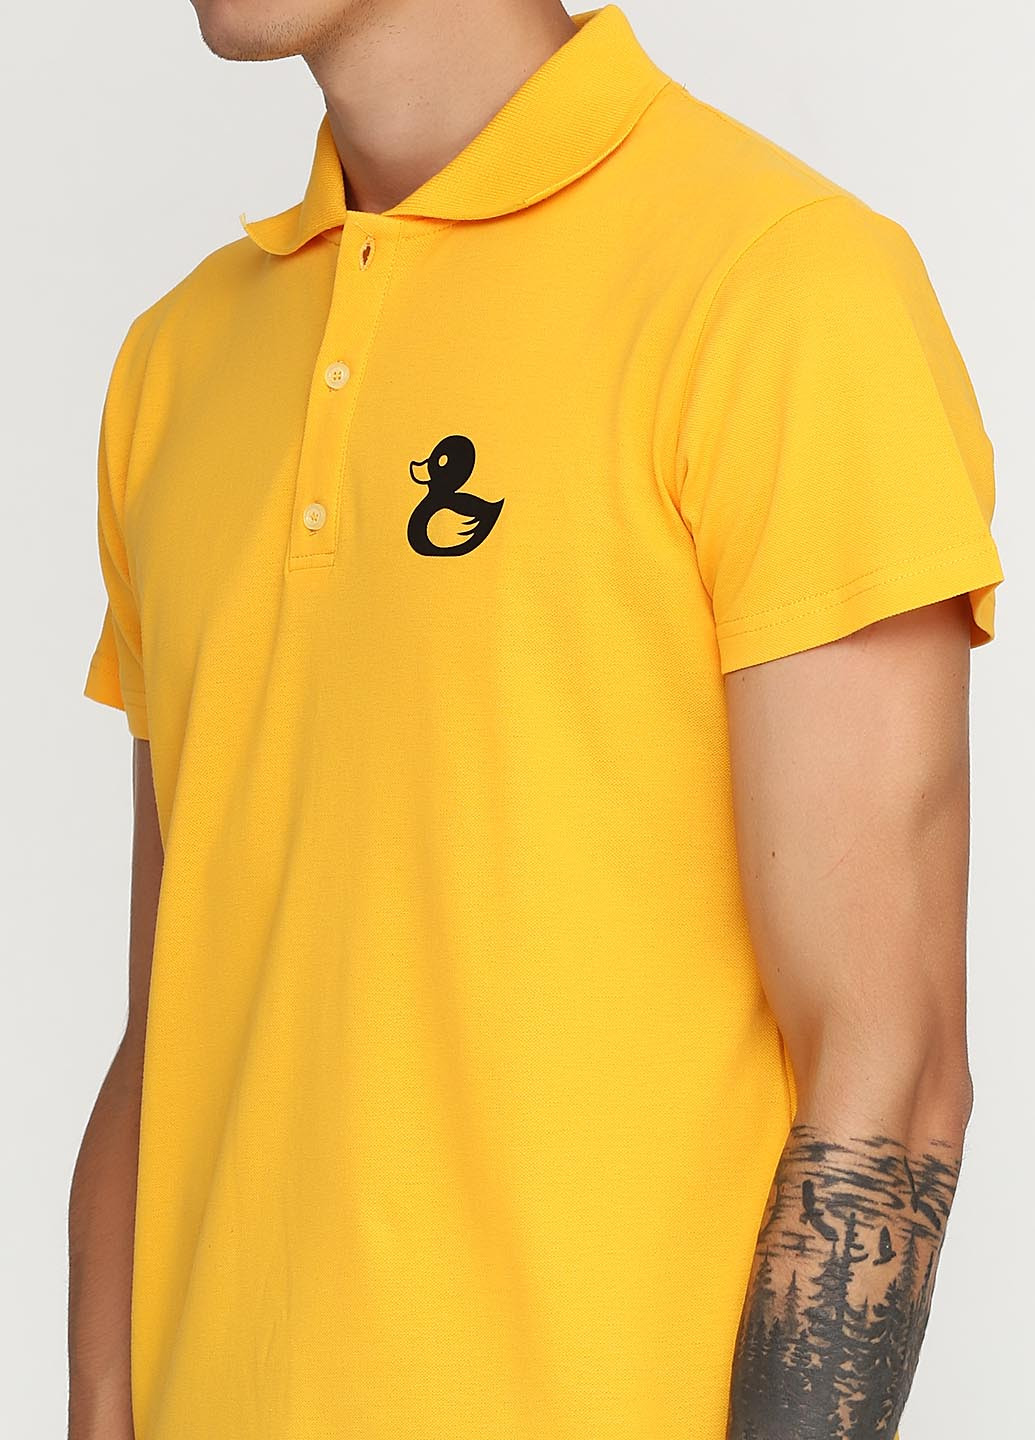 Желтая футболка-поло для мужчин Tryapos с рисунком